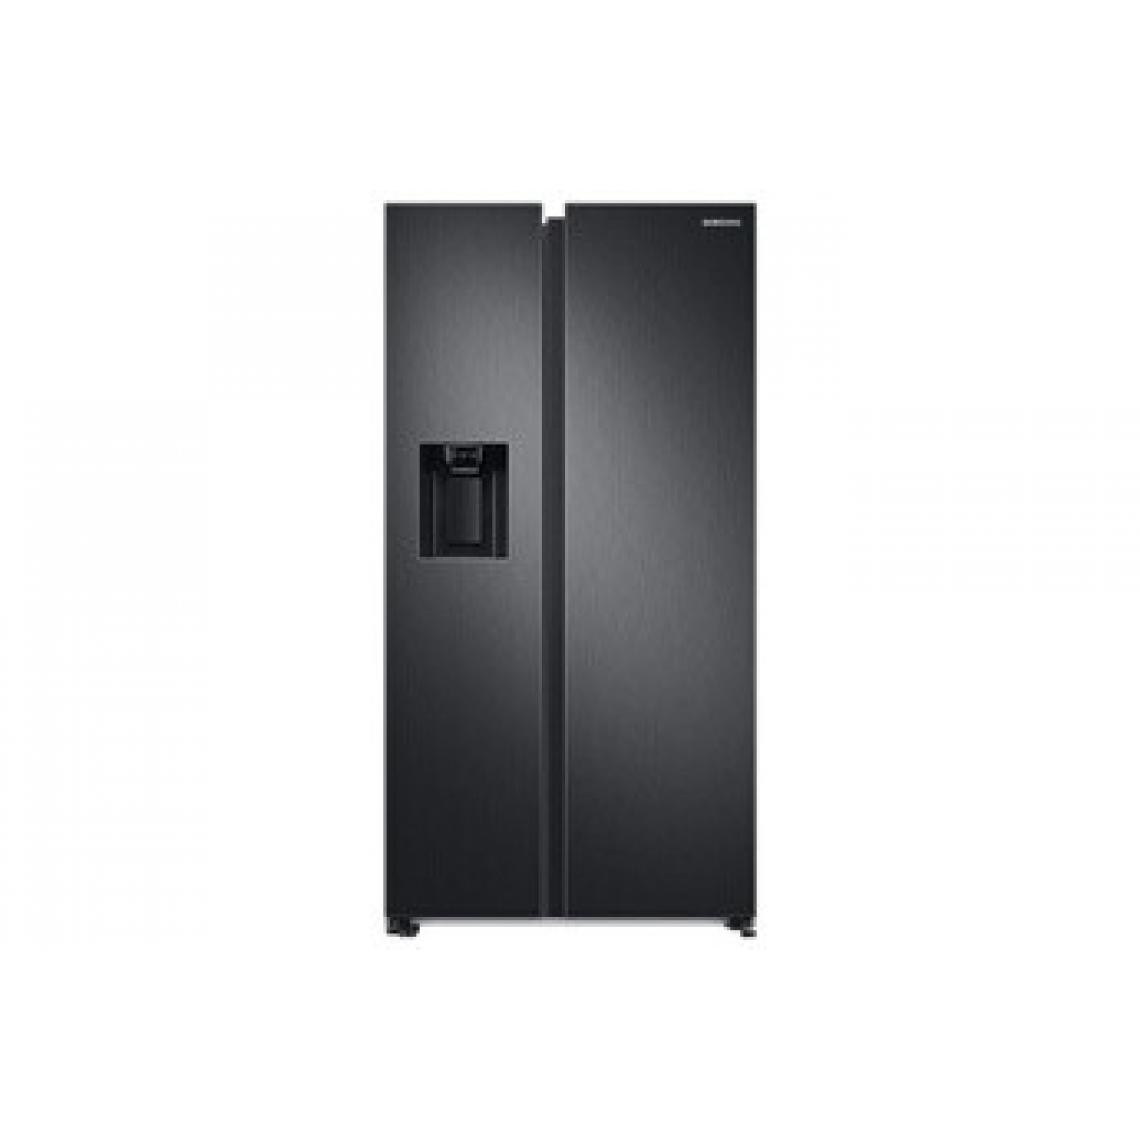 Samsung - Refrigerateur americain Samsung RS68A8841B1 - Réfrigérateur américain